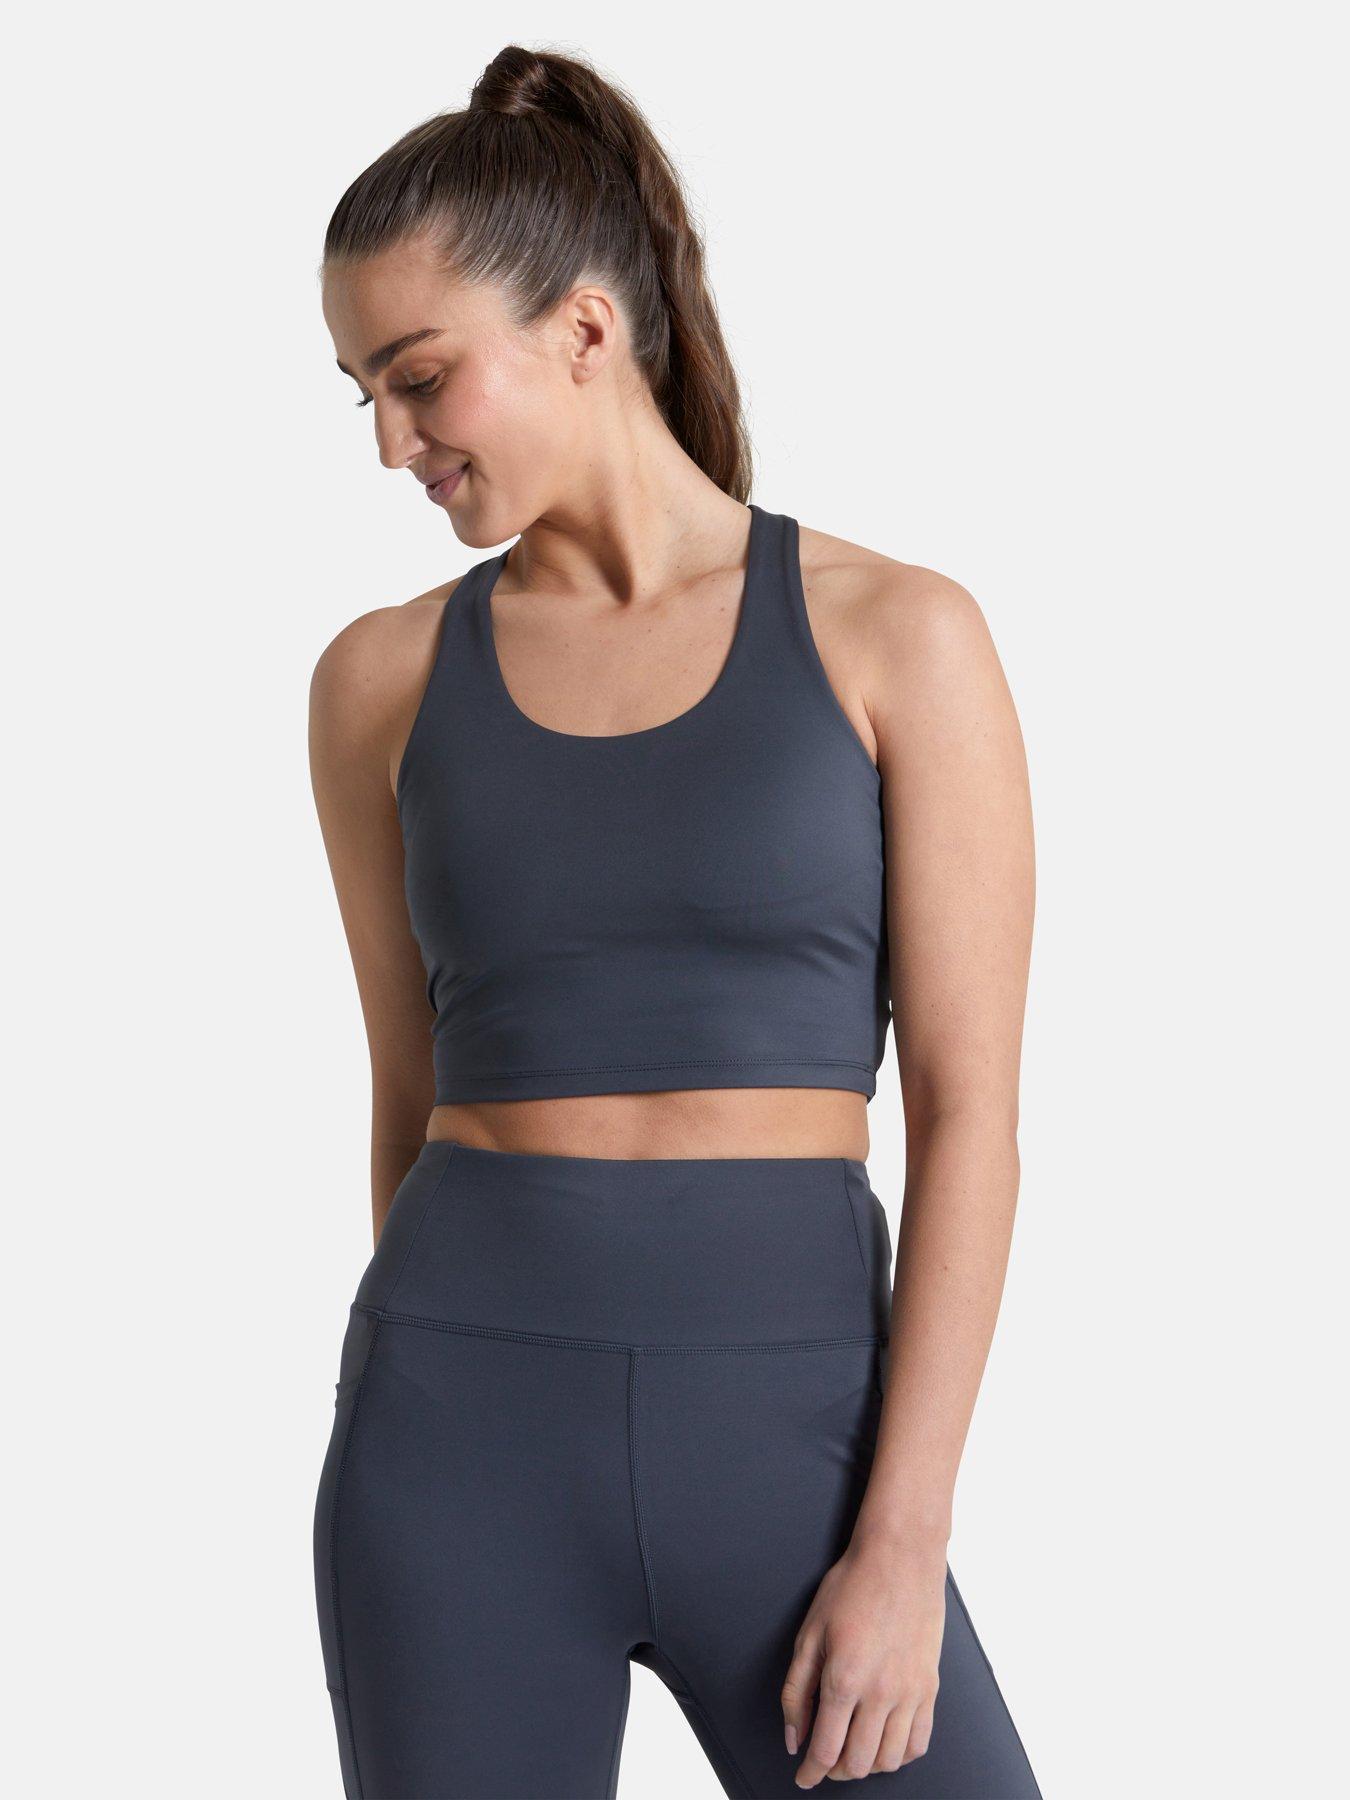 New ORIGINAL Nike Yoga Sports Bra + Short 60% Giveaway, Women's Fashion,  Activewear on Carousell